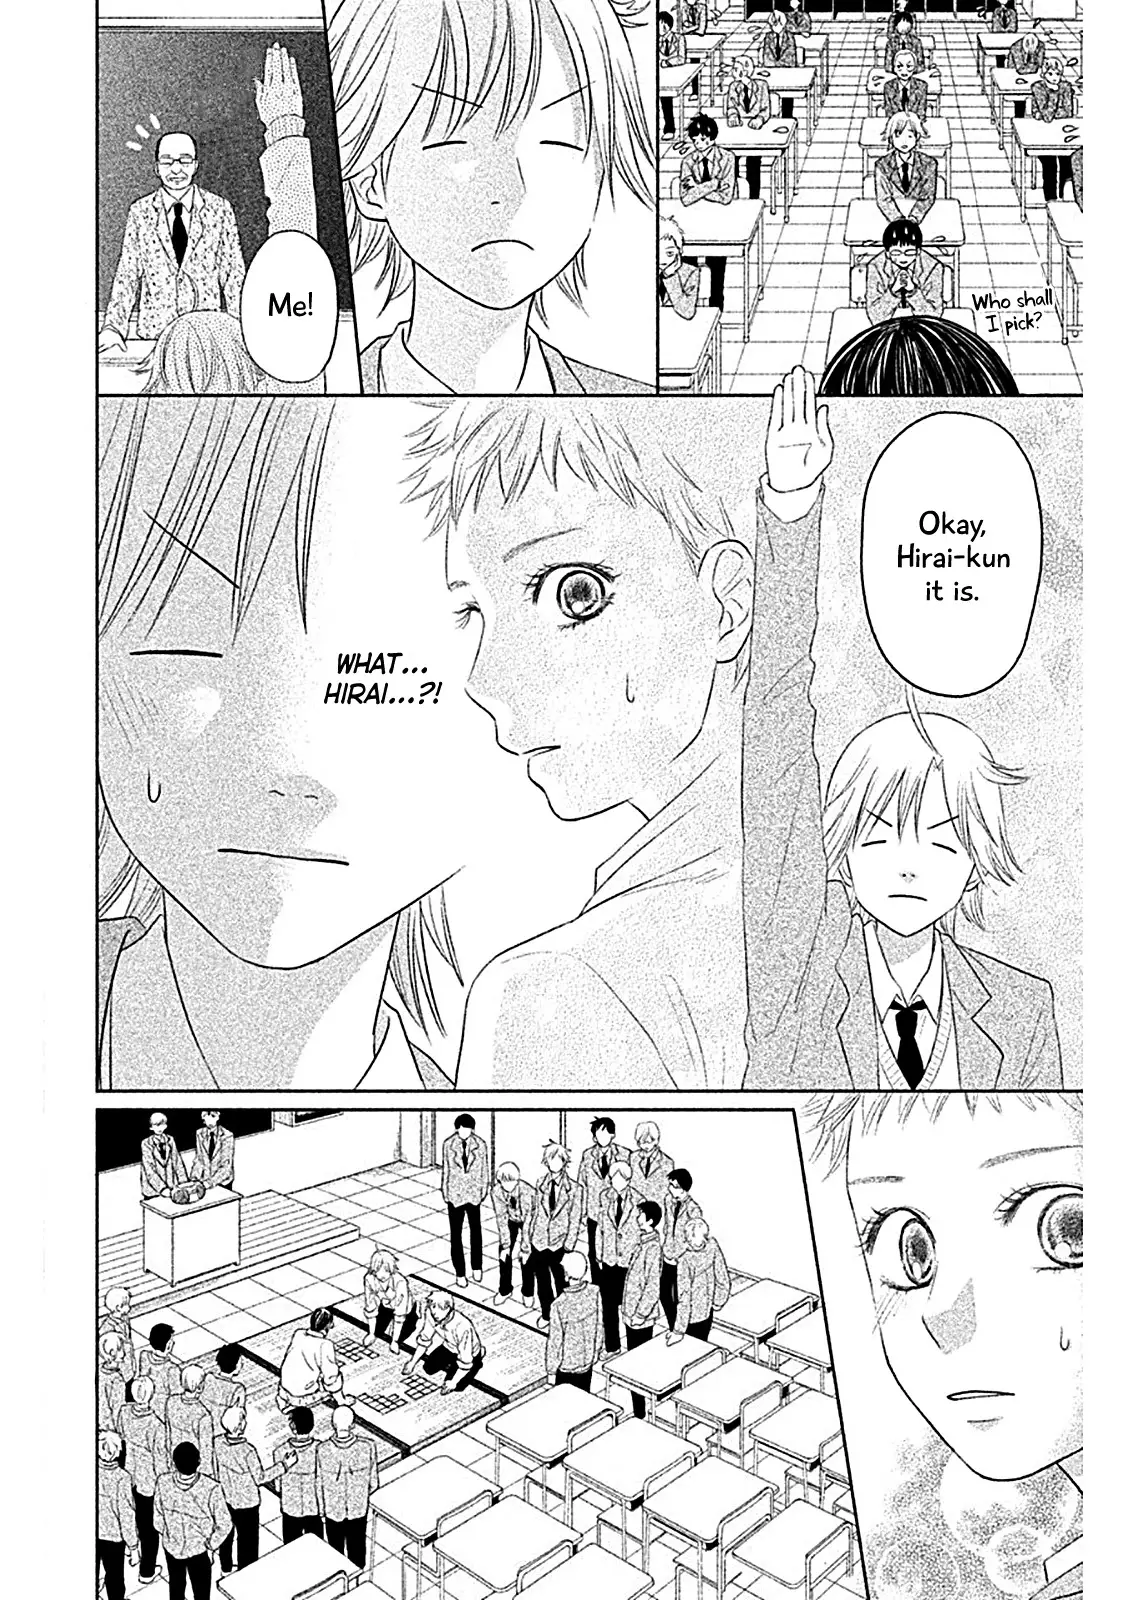 Chihayafuru: Middle School Arc - 5 page 9